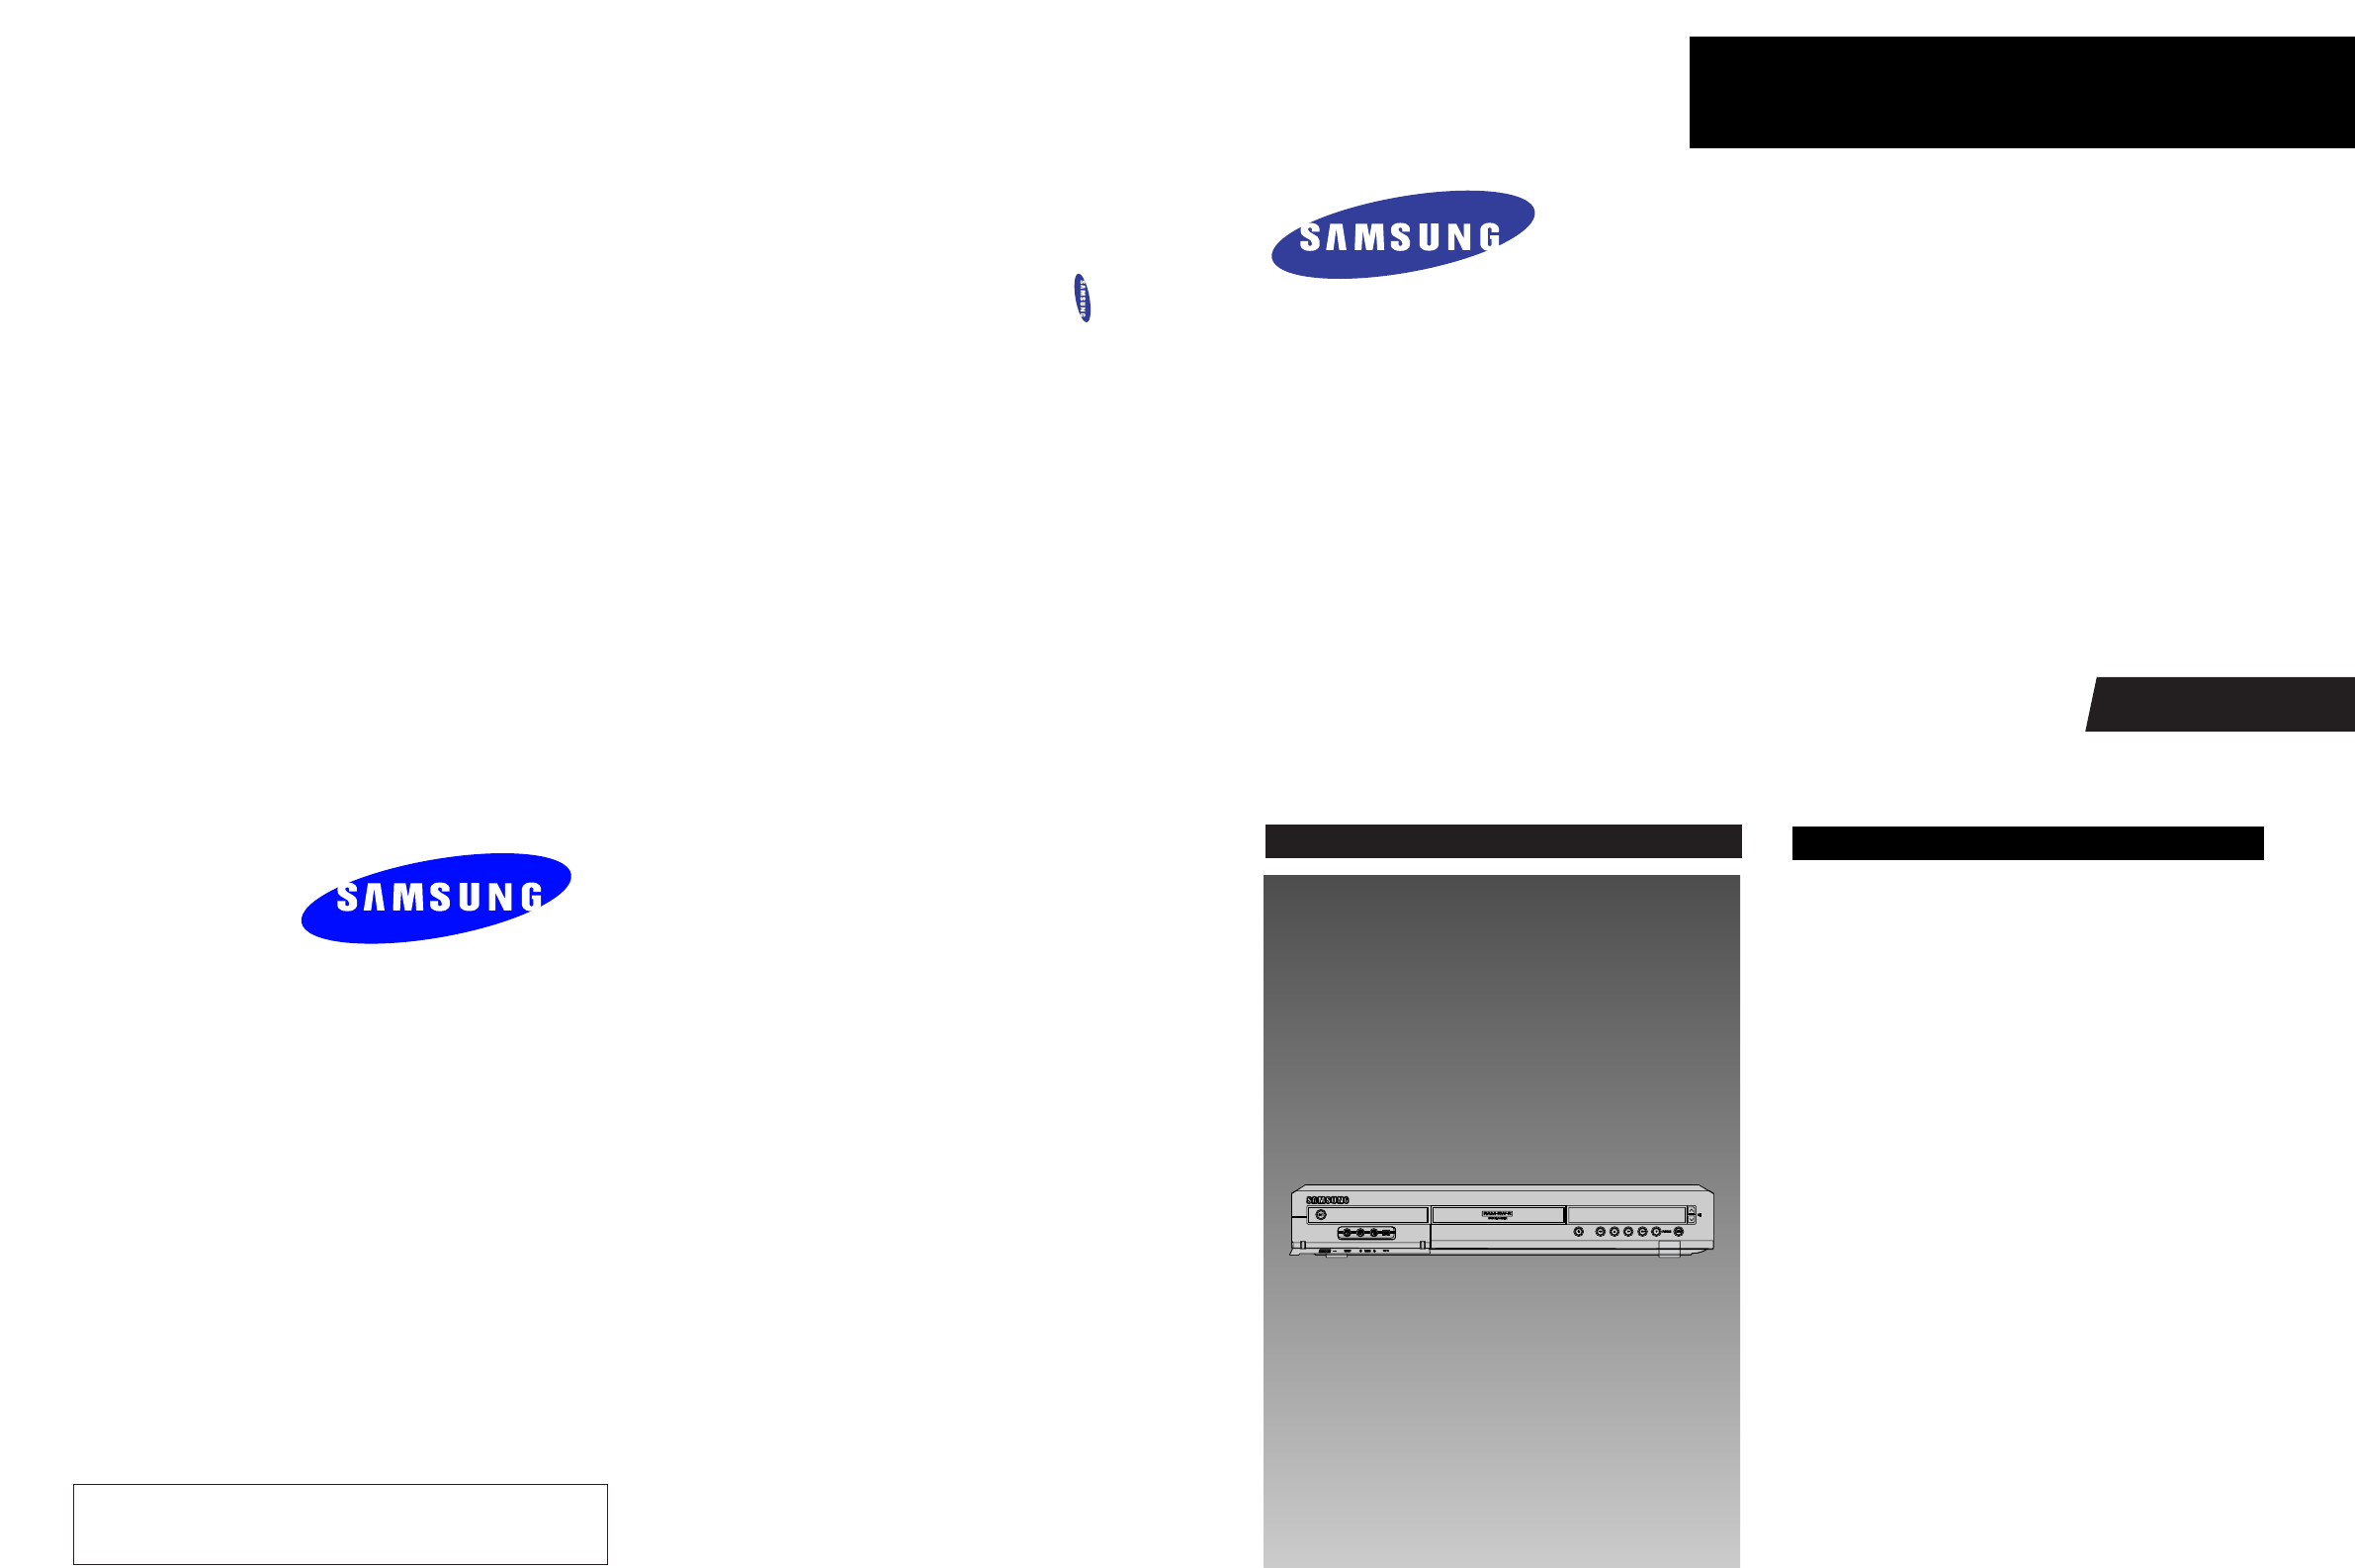 Samsung dvd r120 manual pdf free